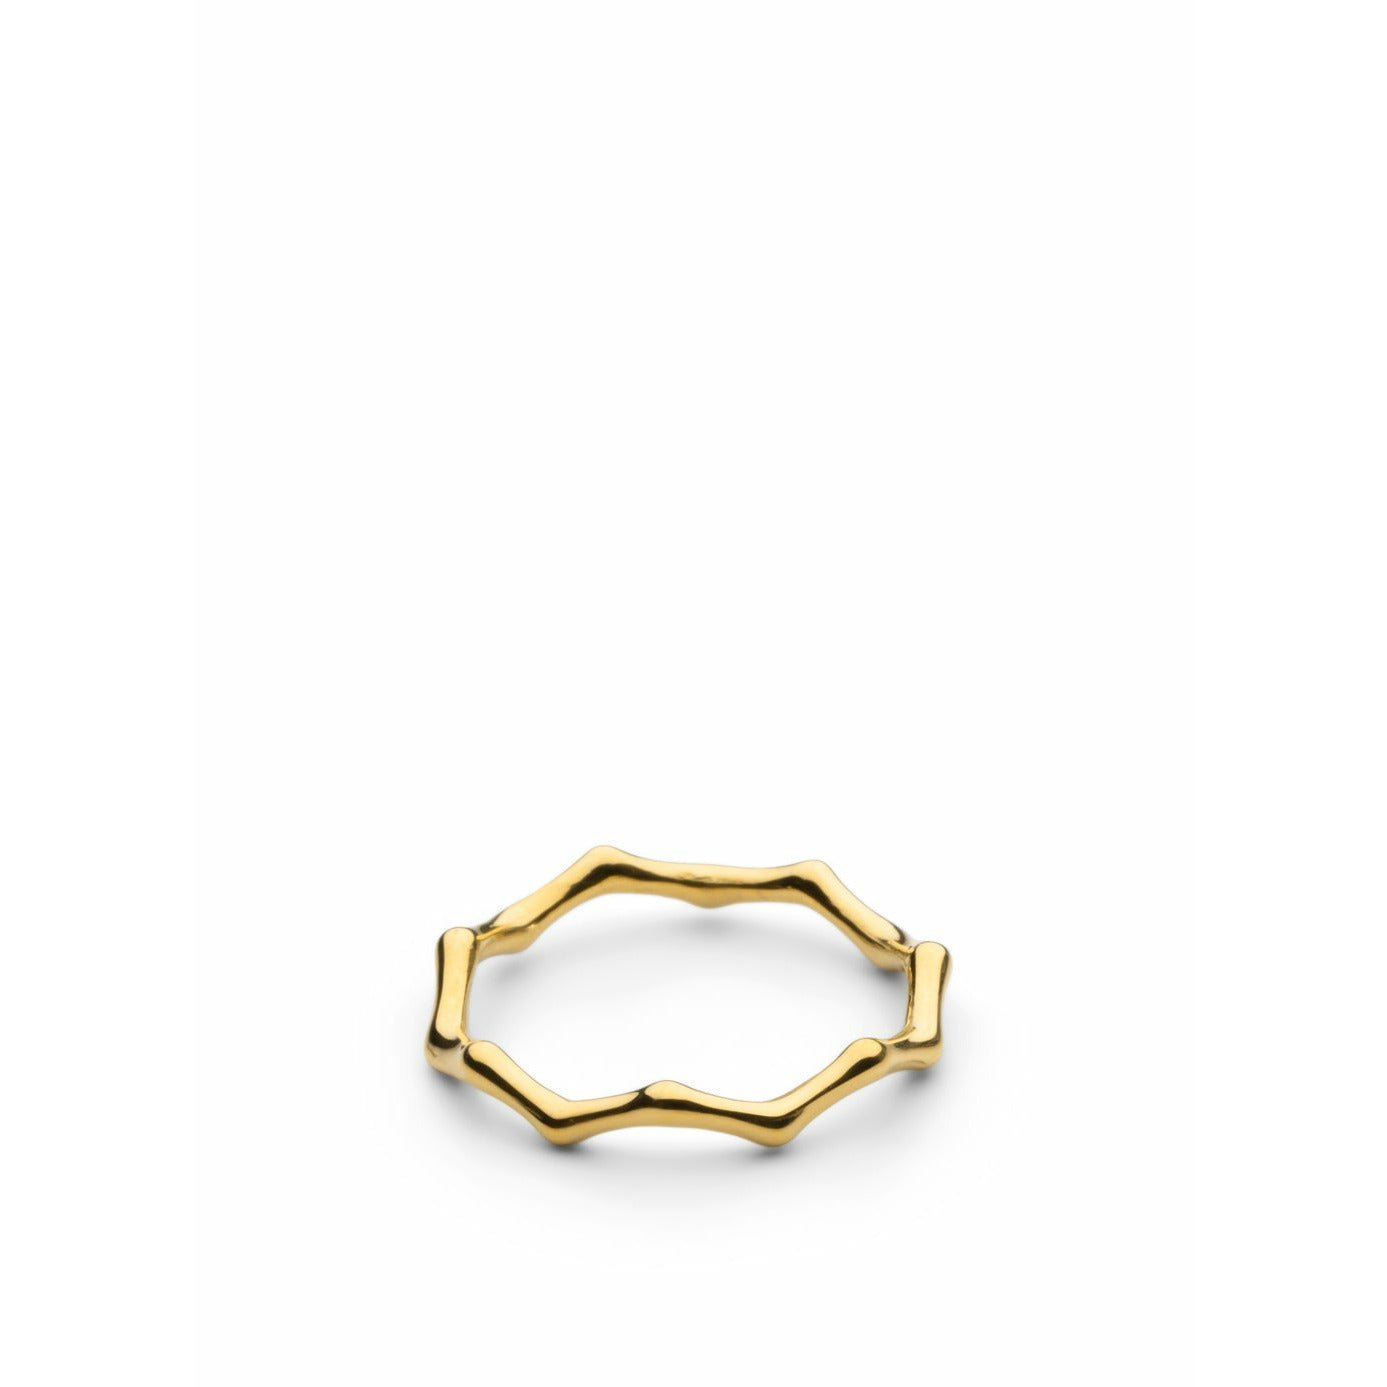 Skultuna Bambou Ring klein, vergoldet, Ø1,6 cm